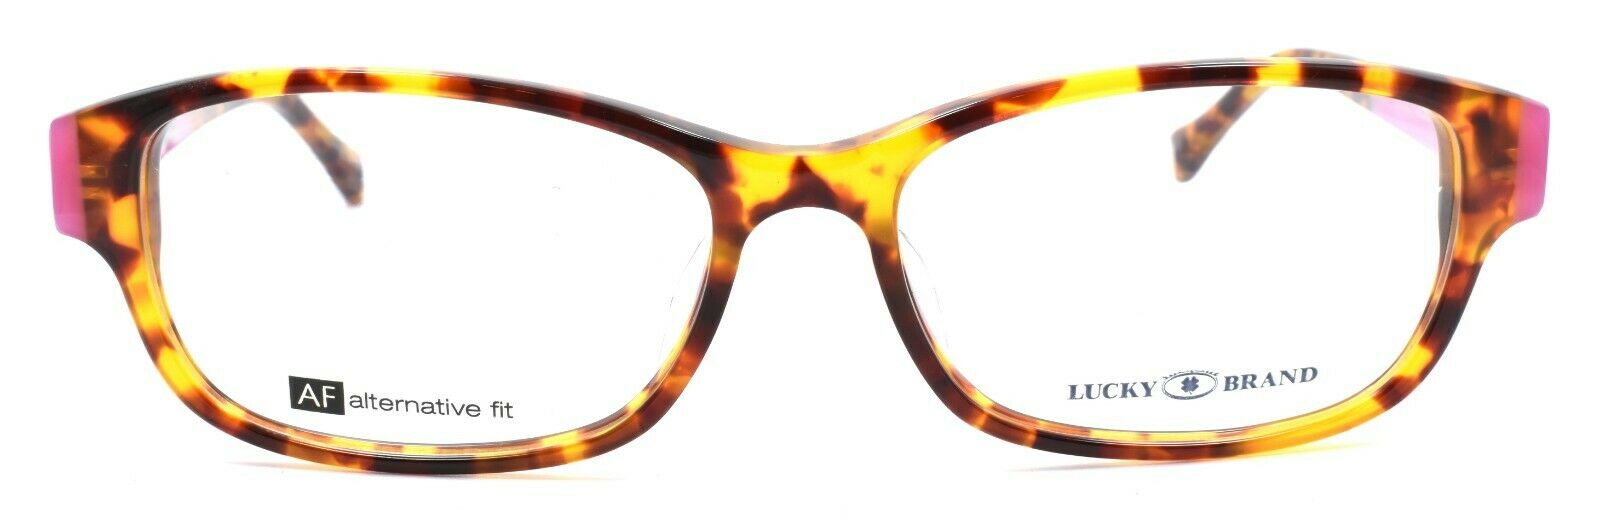 2-LUCKY BRAND Lunada AF Women's Eyeglasses Frames 53-16-140 Havana Tortoise + CASE-751286248456-IKSpecs